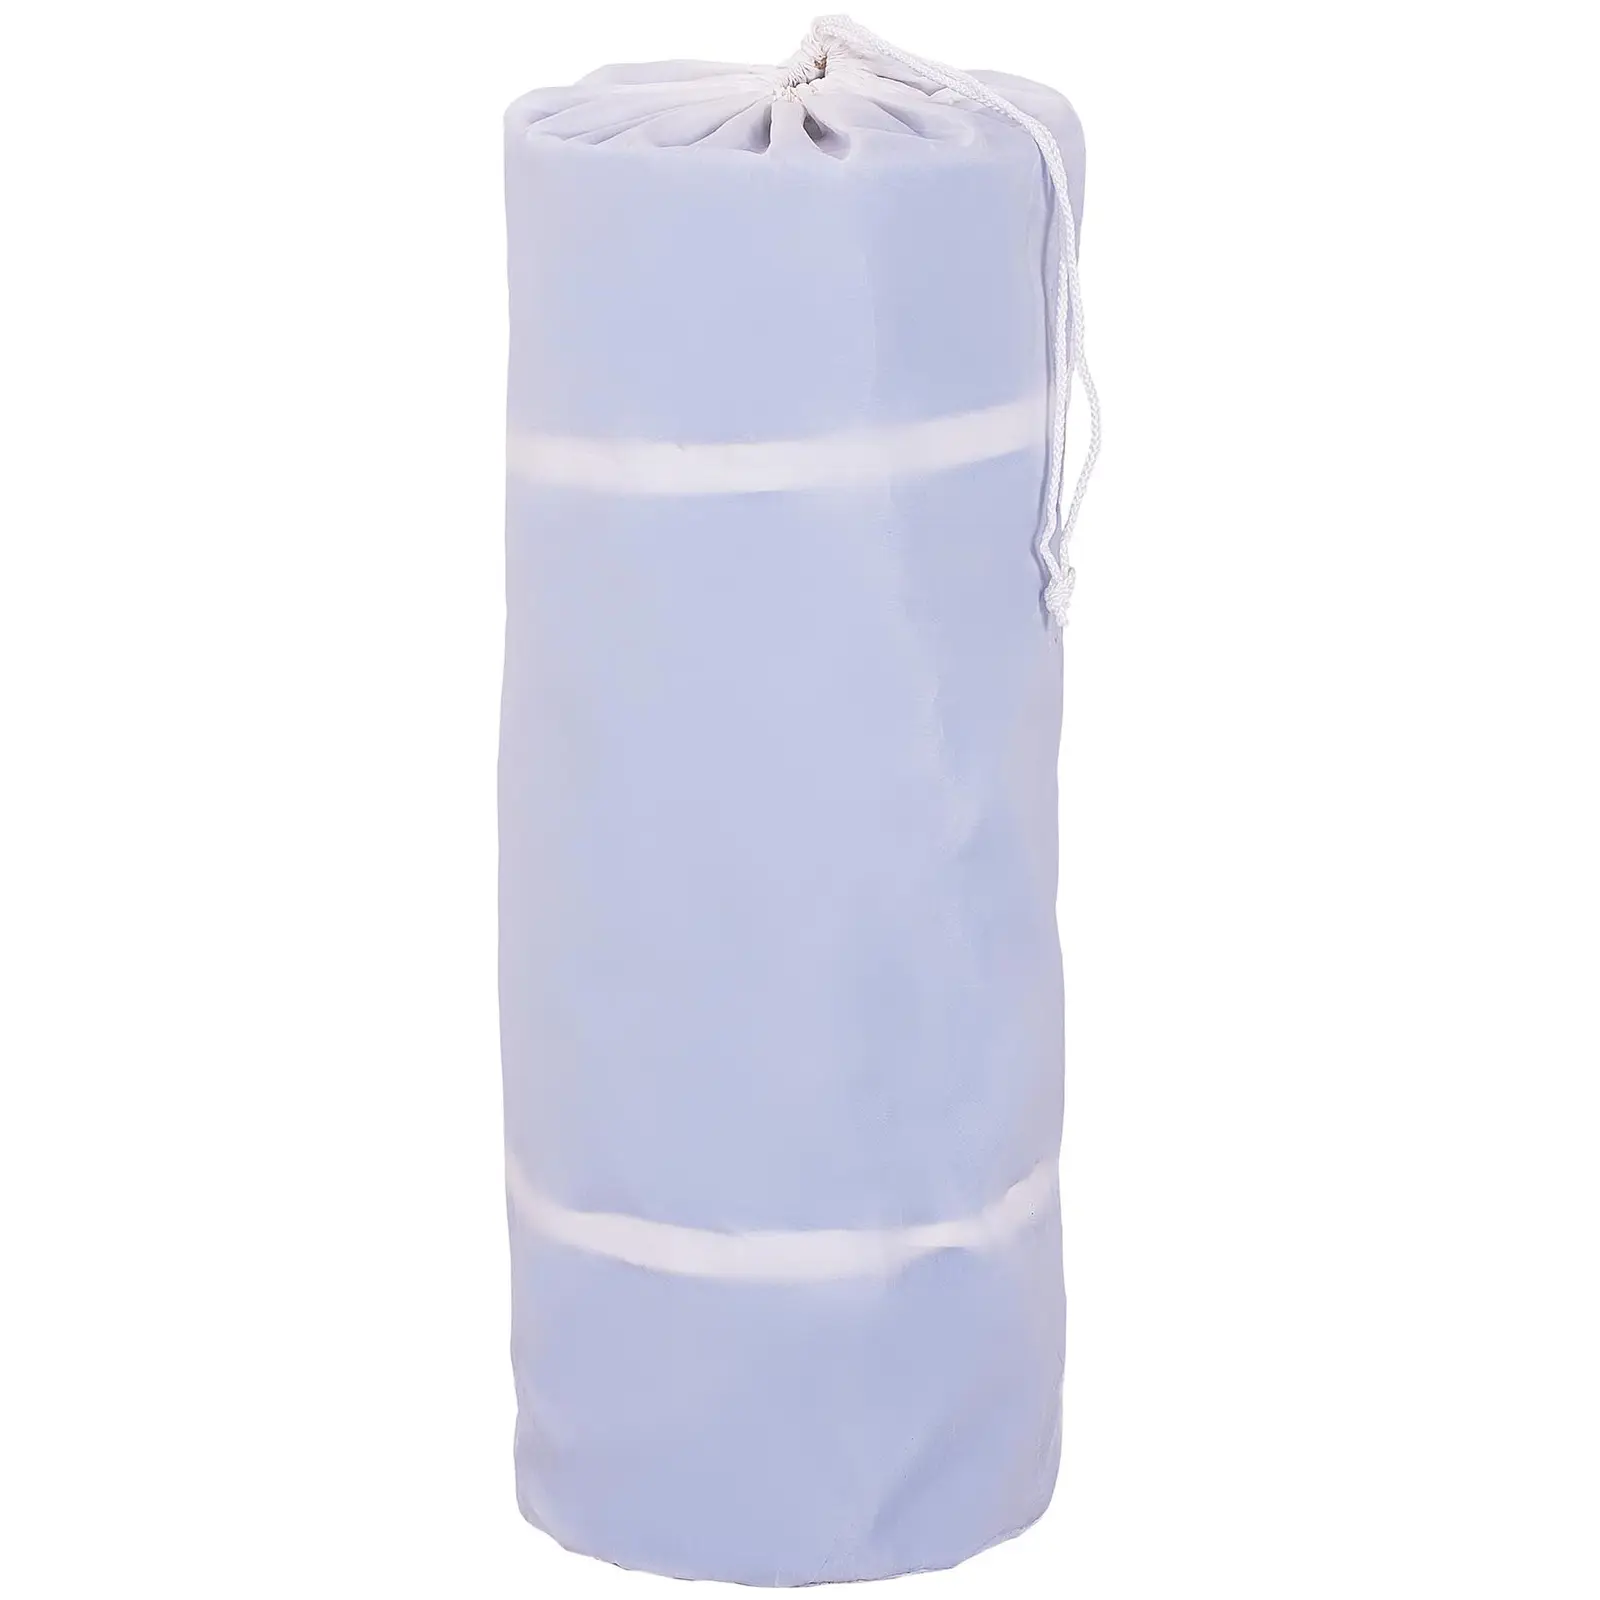 Set tappetino da ginnastica gonfiabile con pompa inclusa - 400 x 100 x 20 cm - 200 kg - blu/bianco